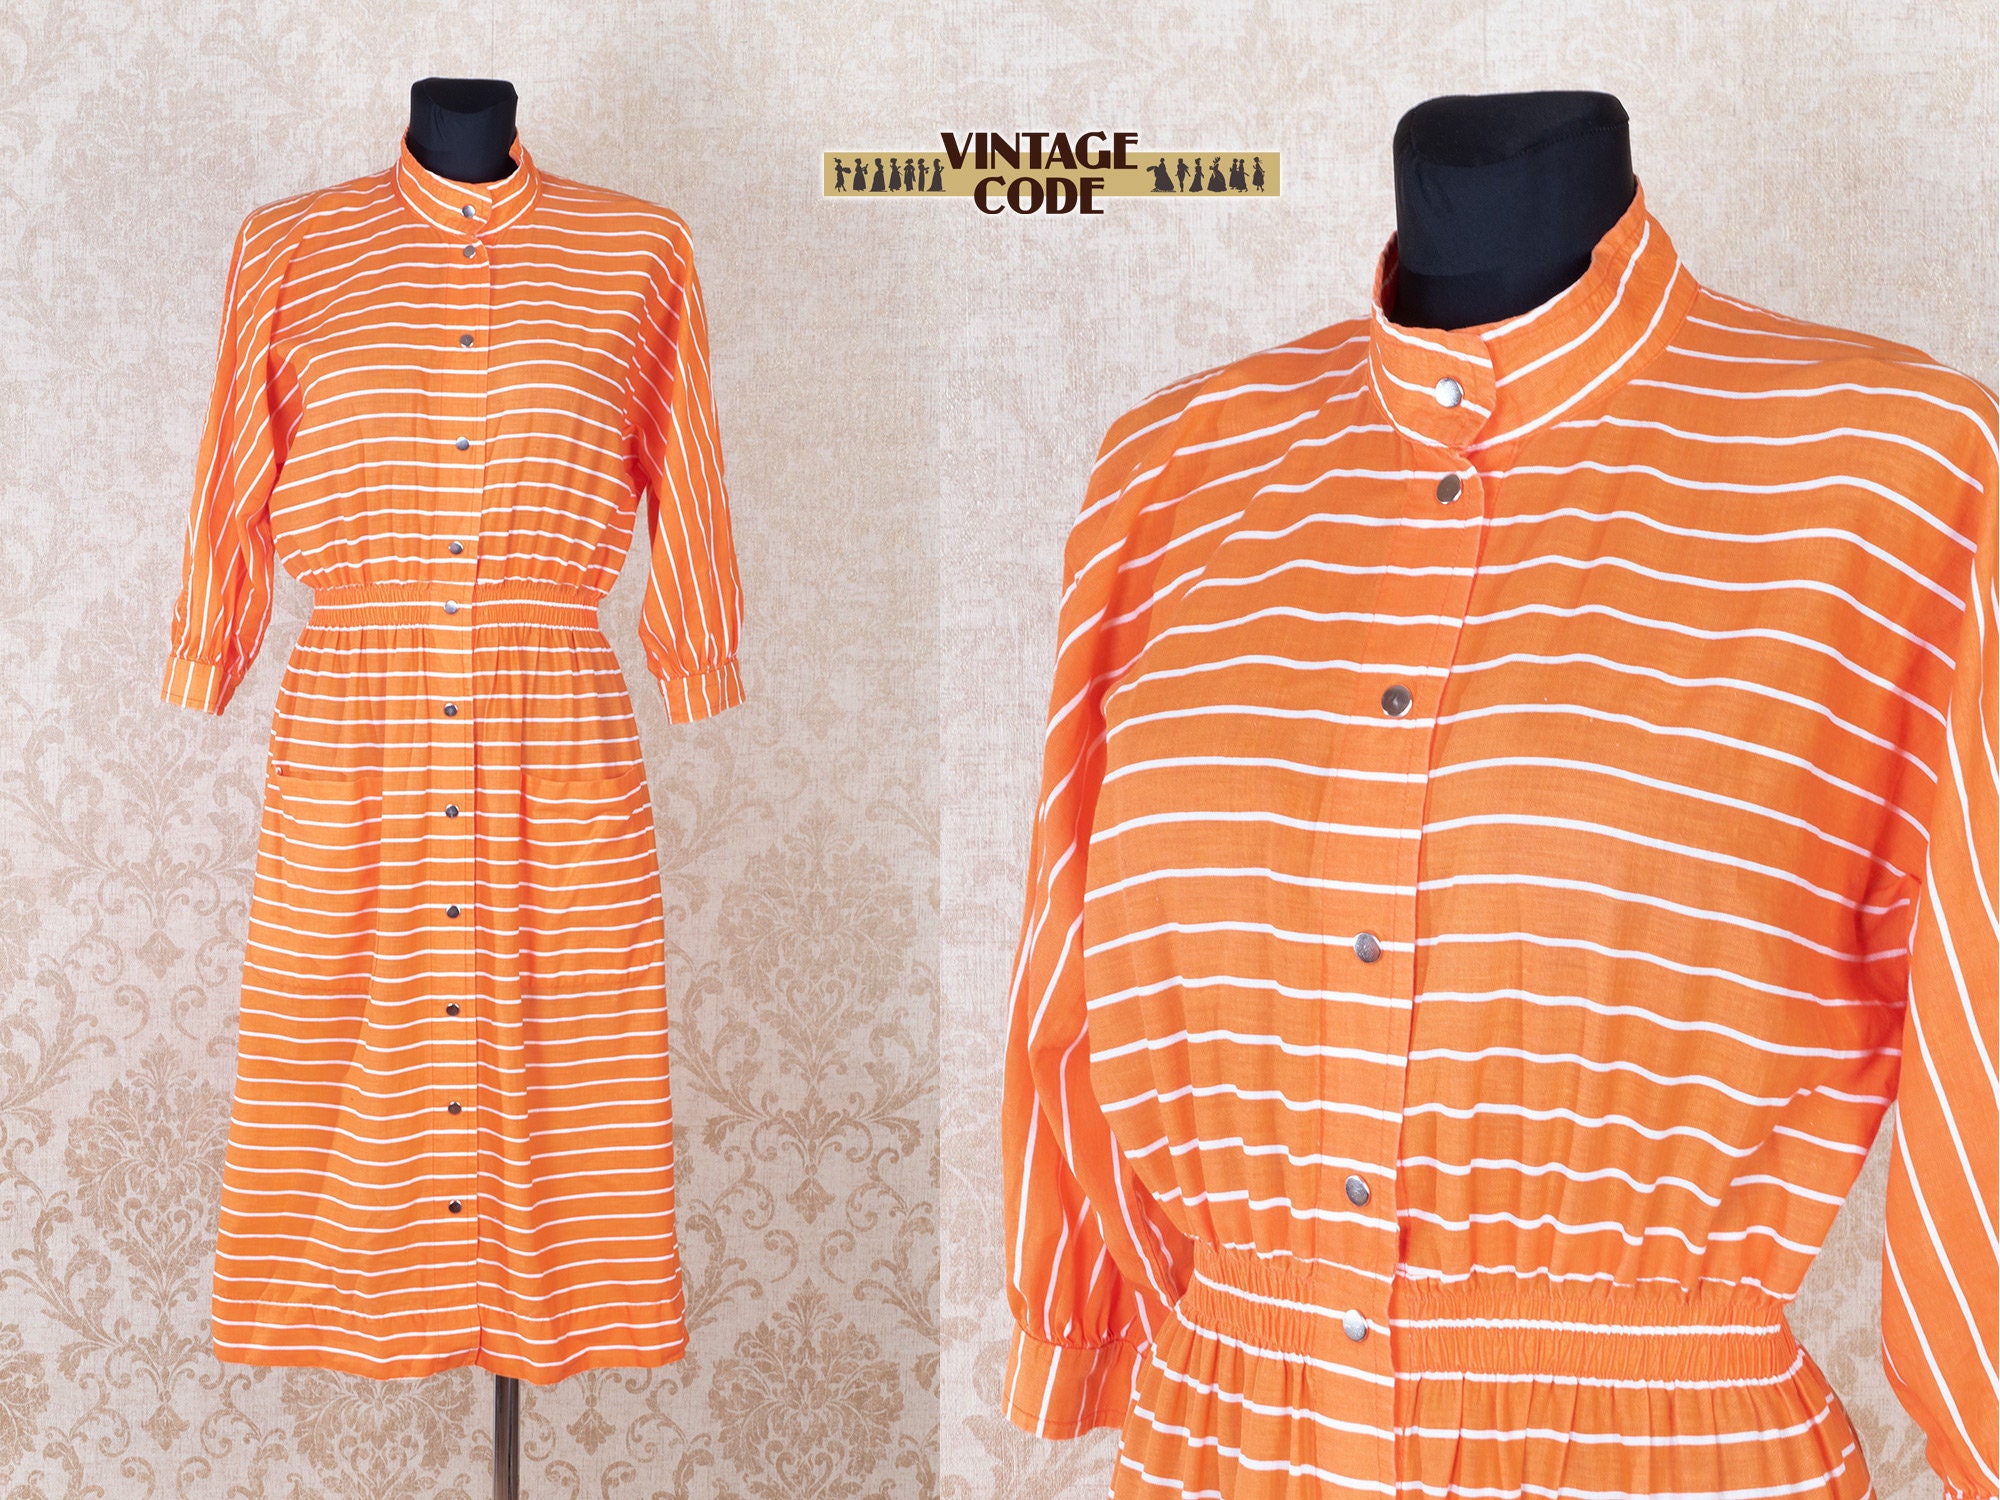 Carrot Orange Vuokko Nurmesniemi Striped Cotton Dress / Button - Etsy